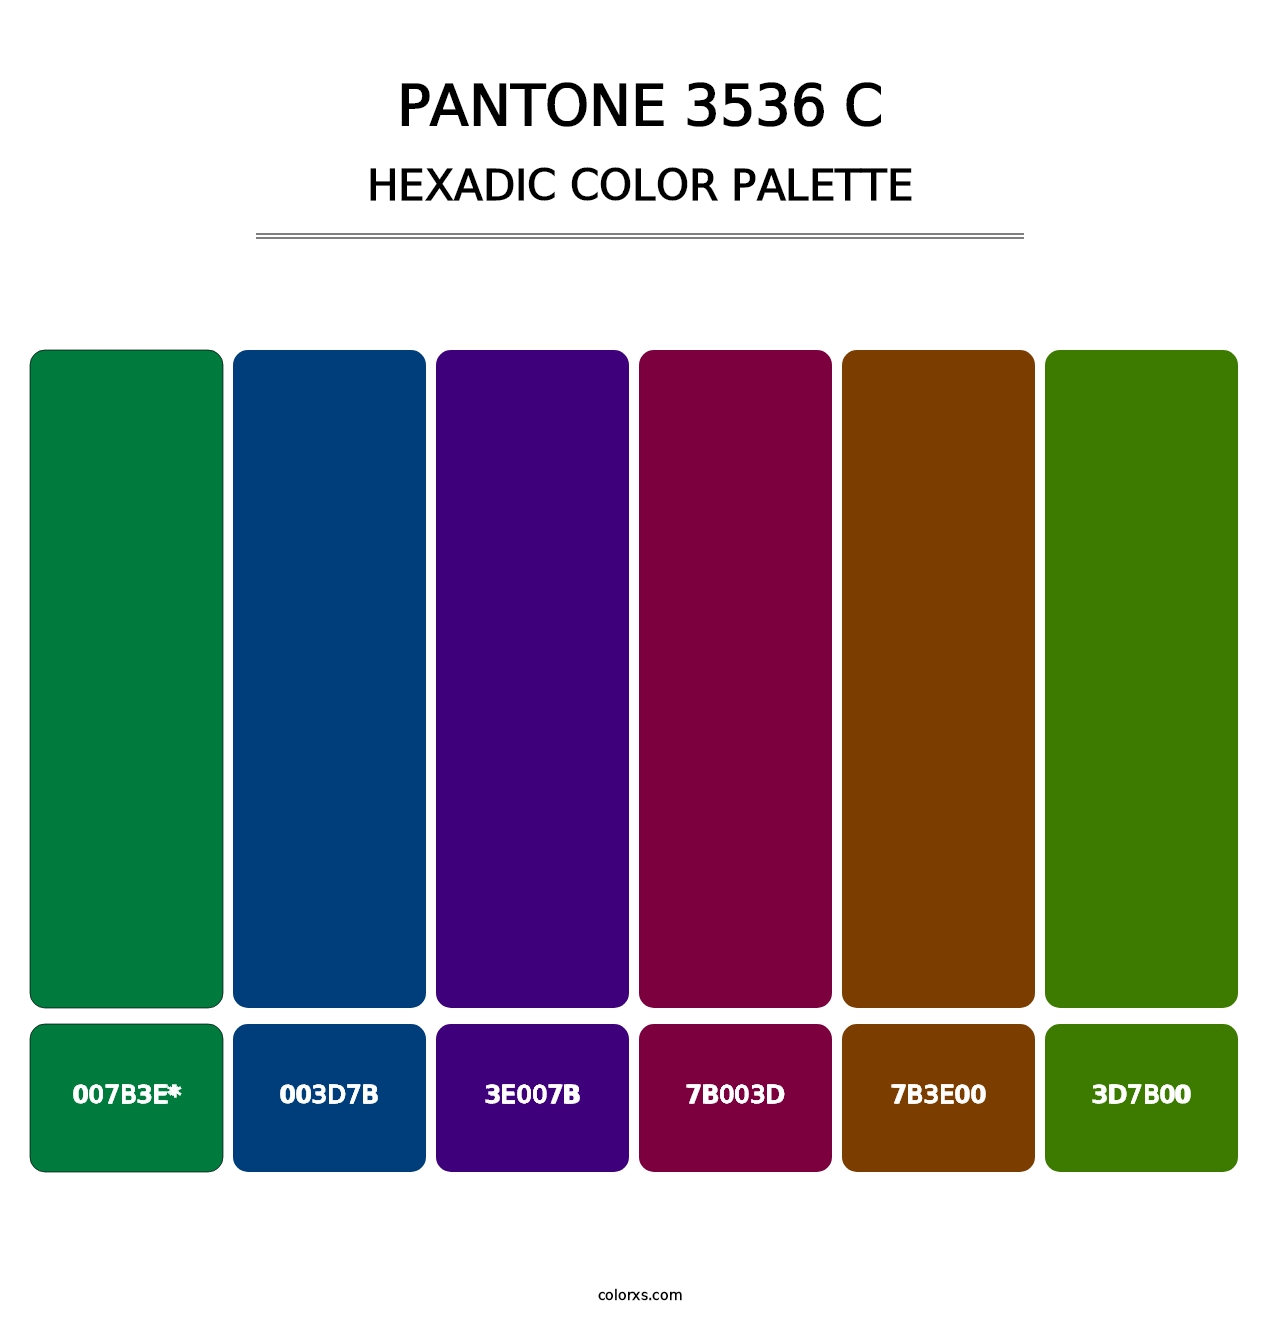 PANTONE 3536 C - Hexadic Color Palette